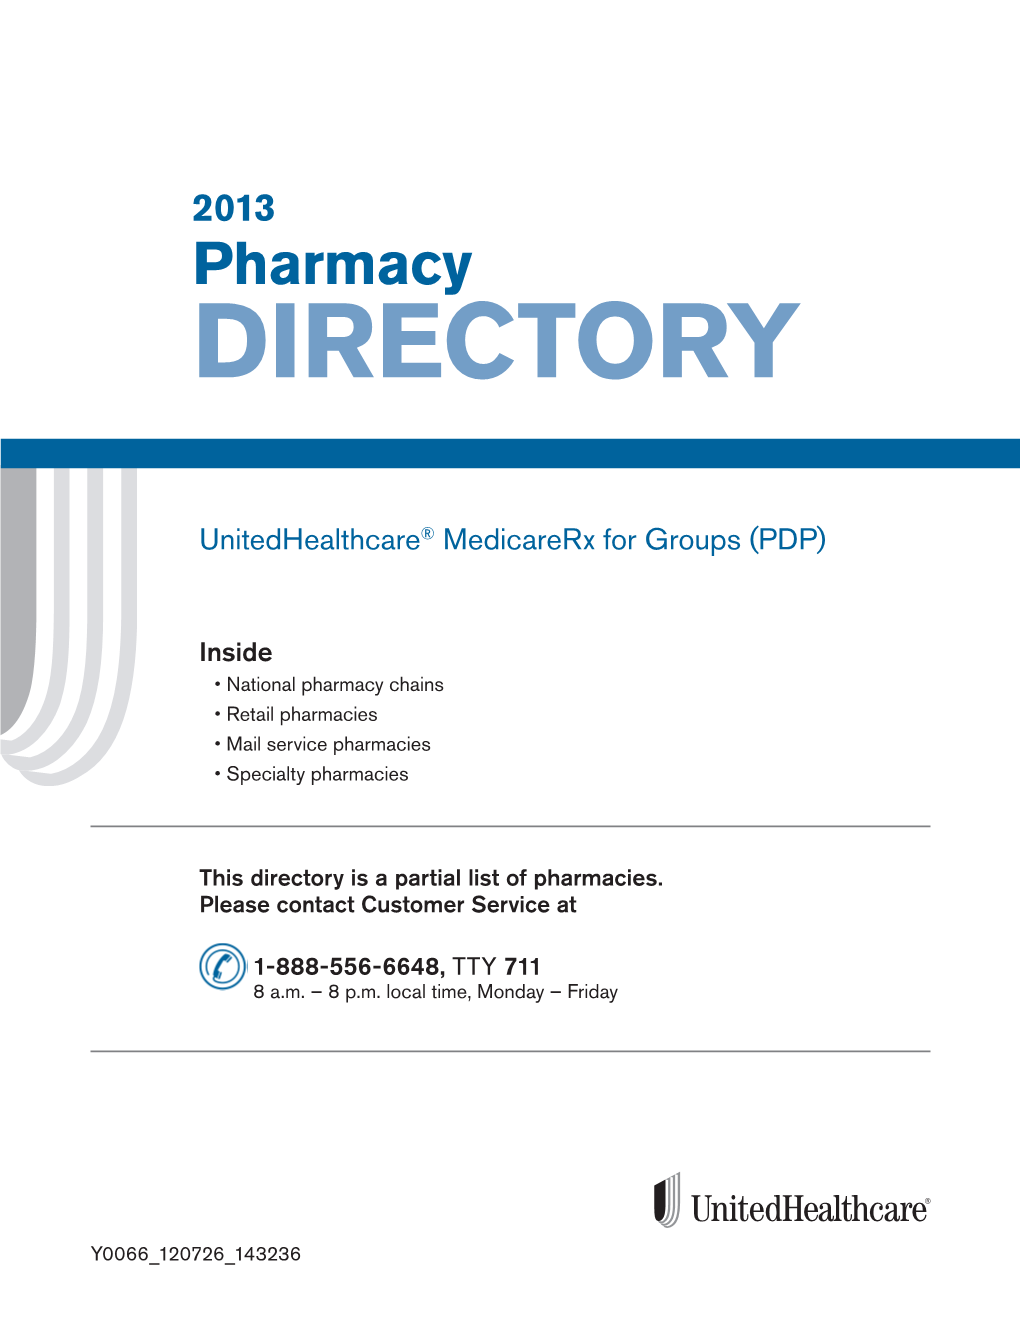 Pharmacy Directory